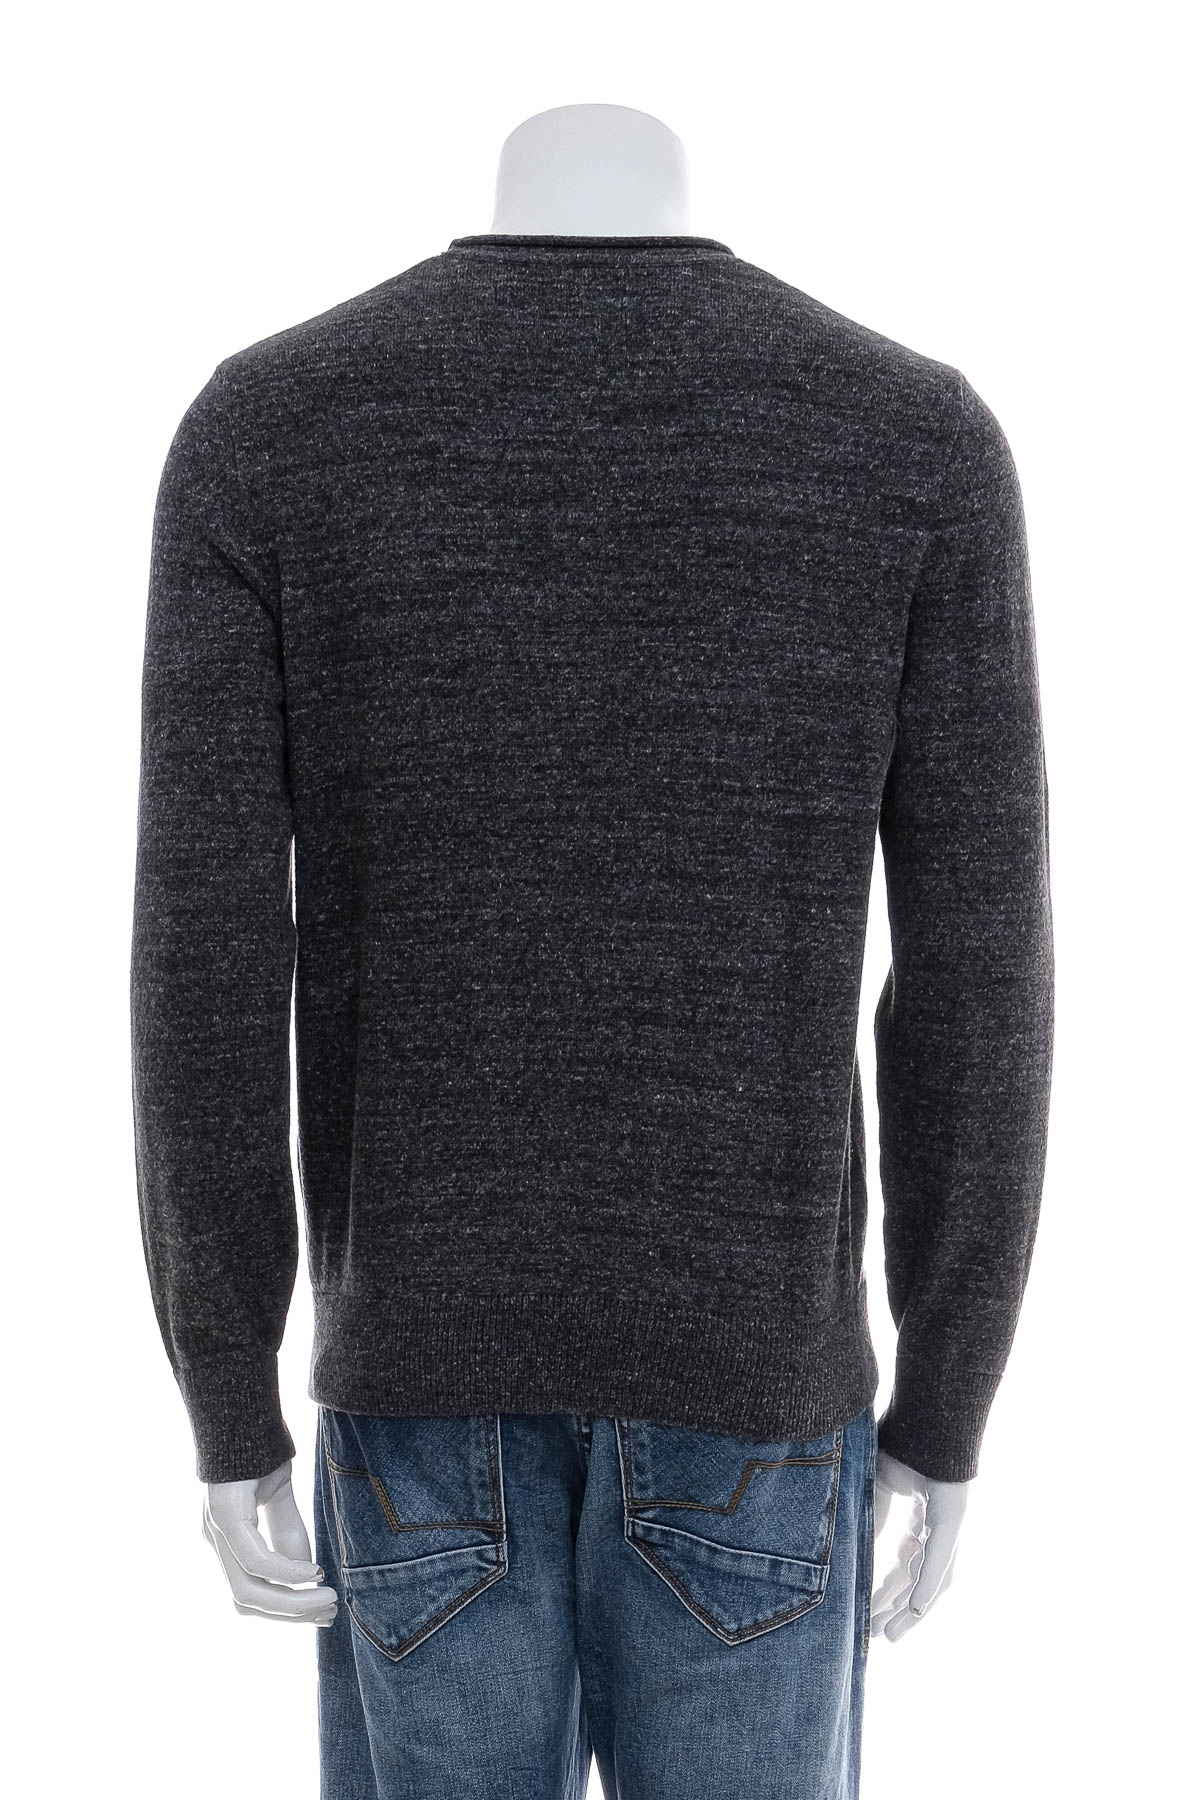 Men's sweater - GAP - 1